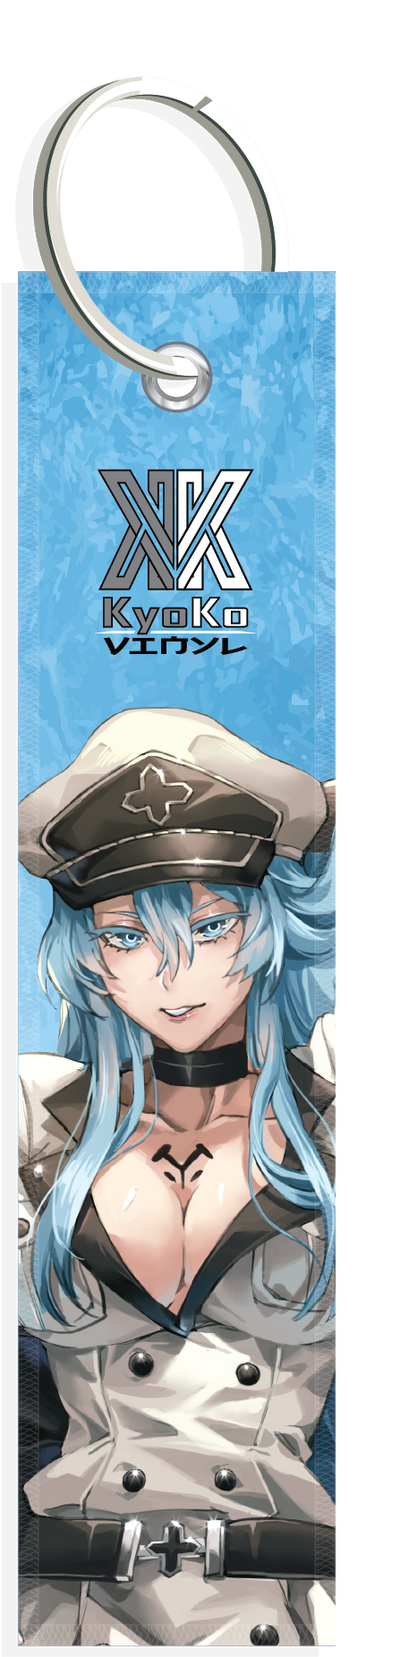 My Hero Academia - Deku Anime Credit Card Skin – KyokoVinyl